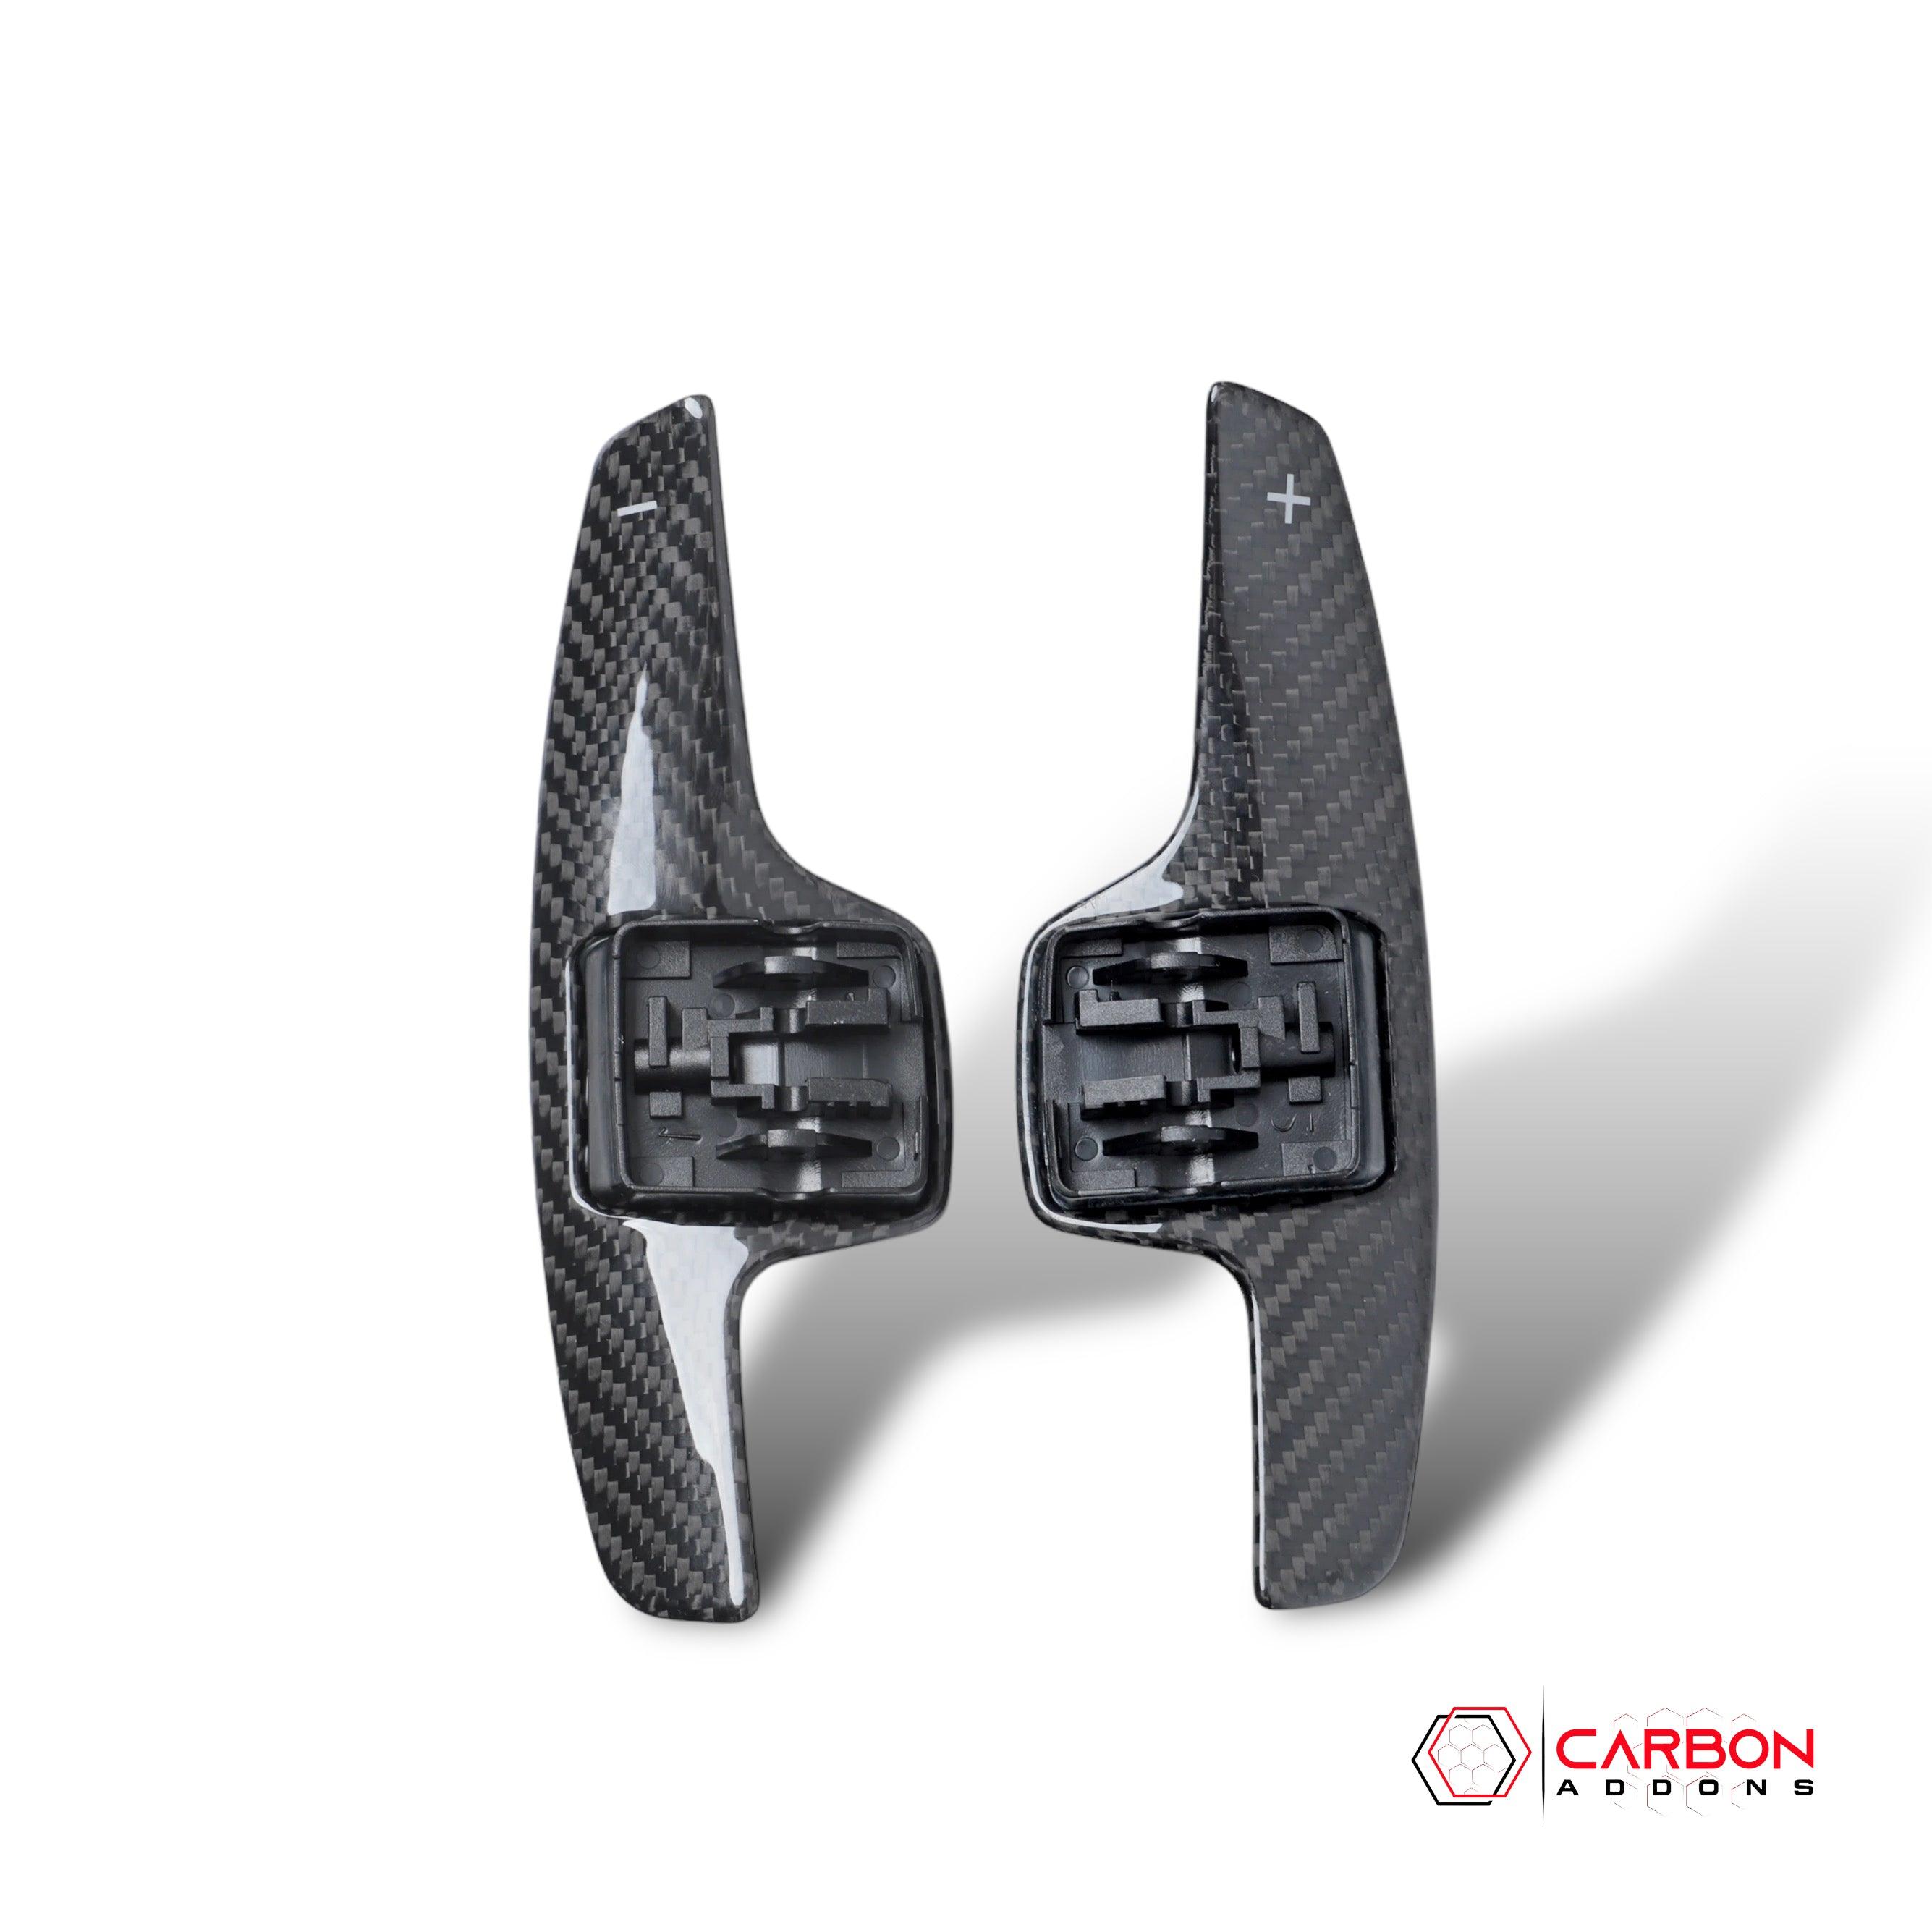 Camaro/Corvette Extended Carbon Fiber Paddle Shifter - carbonaddons Carbon Fiber Parts, Accessories, Upgrades, Mods